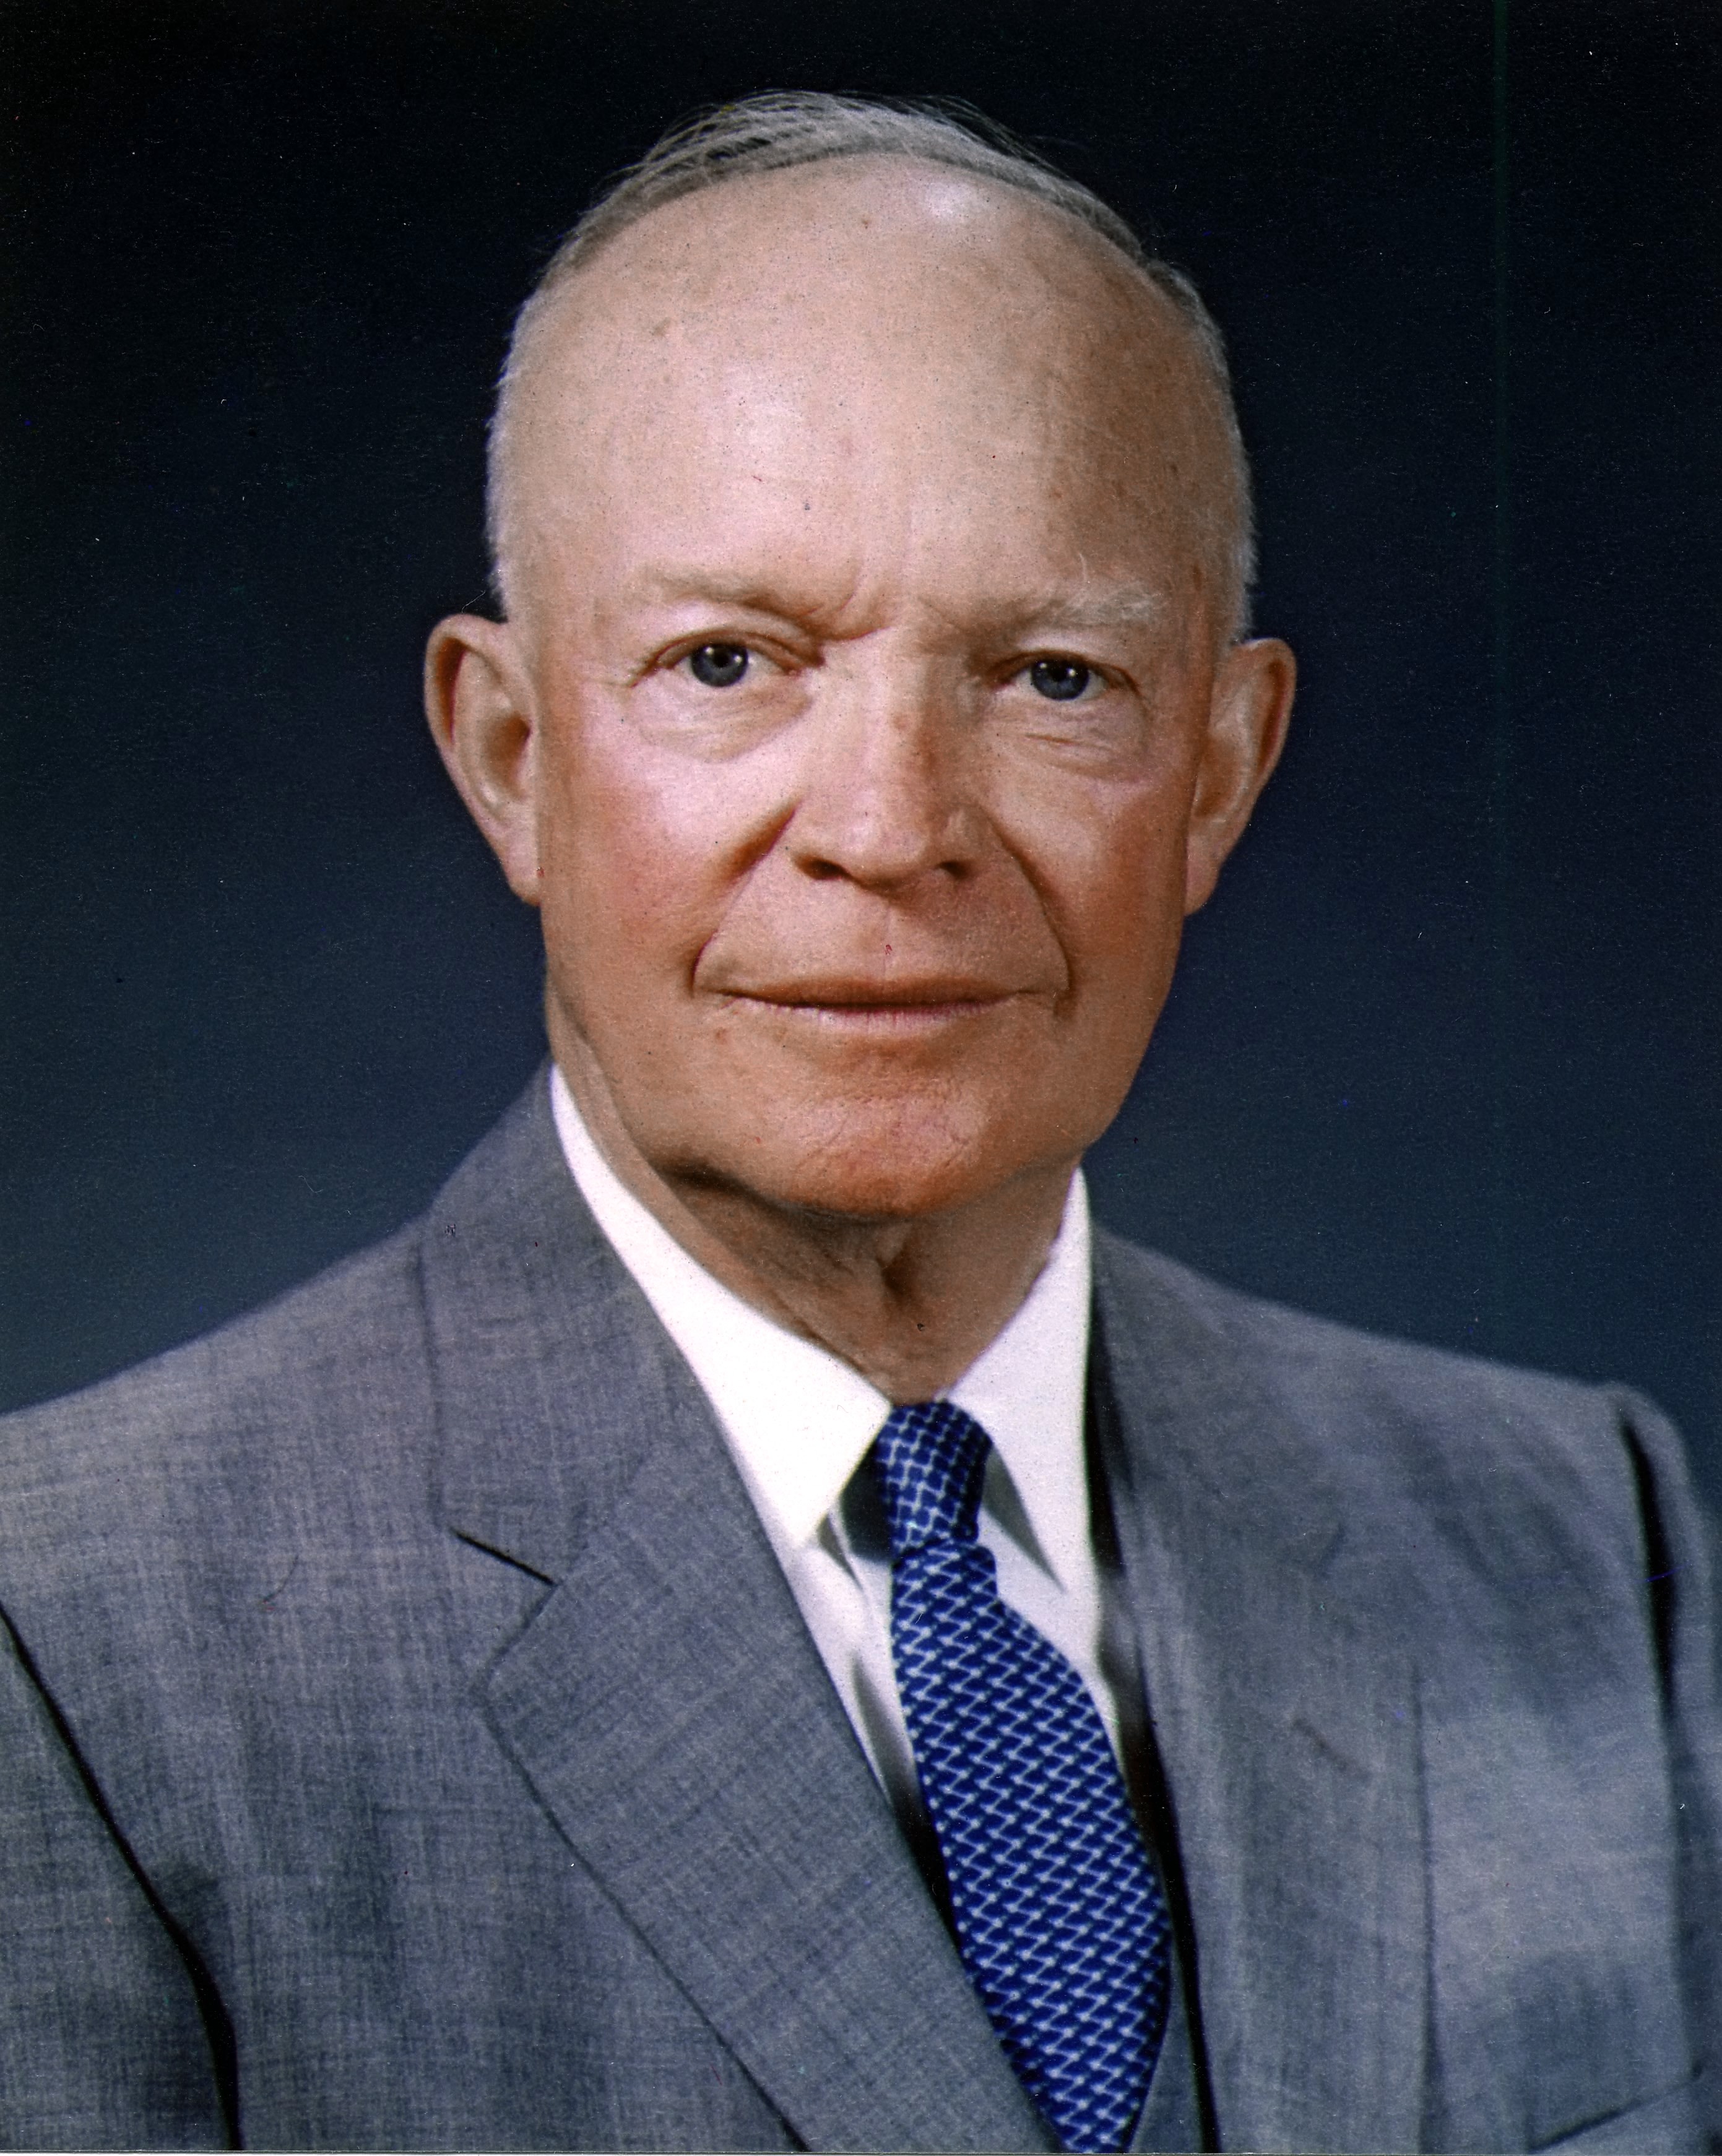 Dwight_D._Eisenhower,_official_photo_portrait,_May_29,_1959.jpg